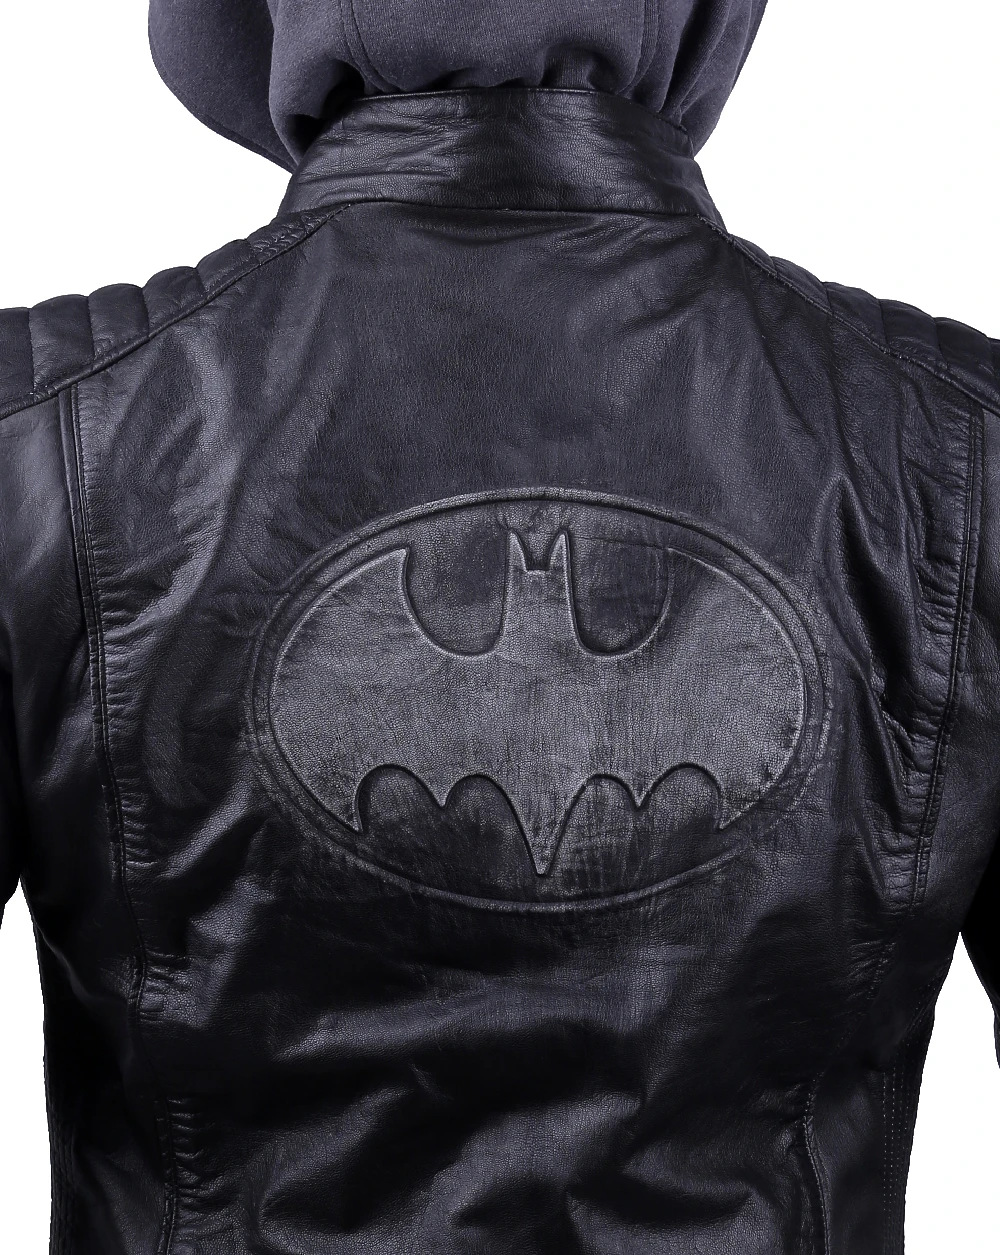 Batman Costume Bruce Wayne Justice League Jacket